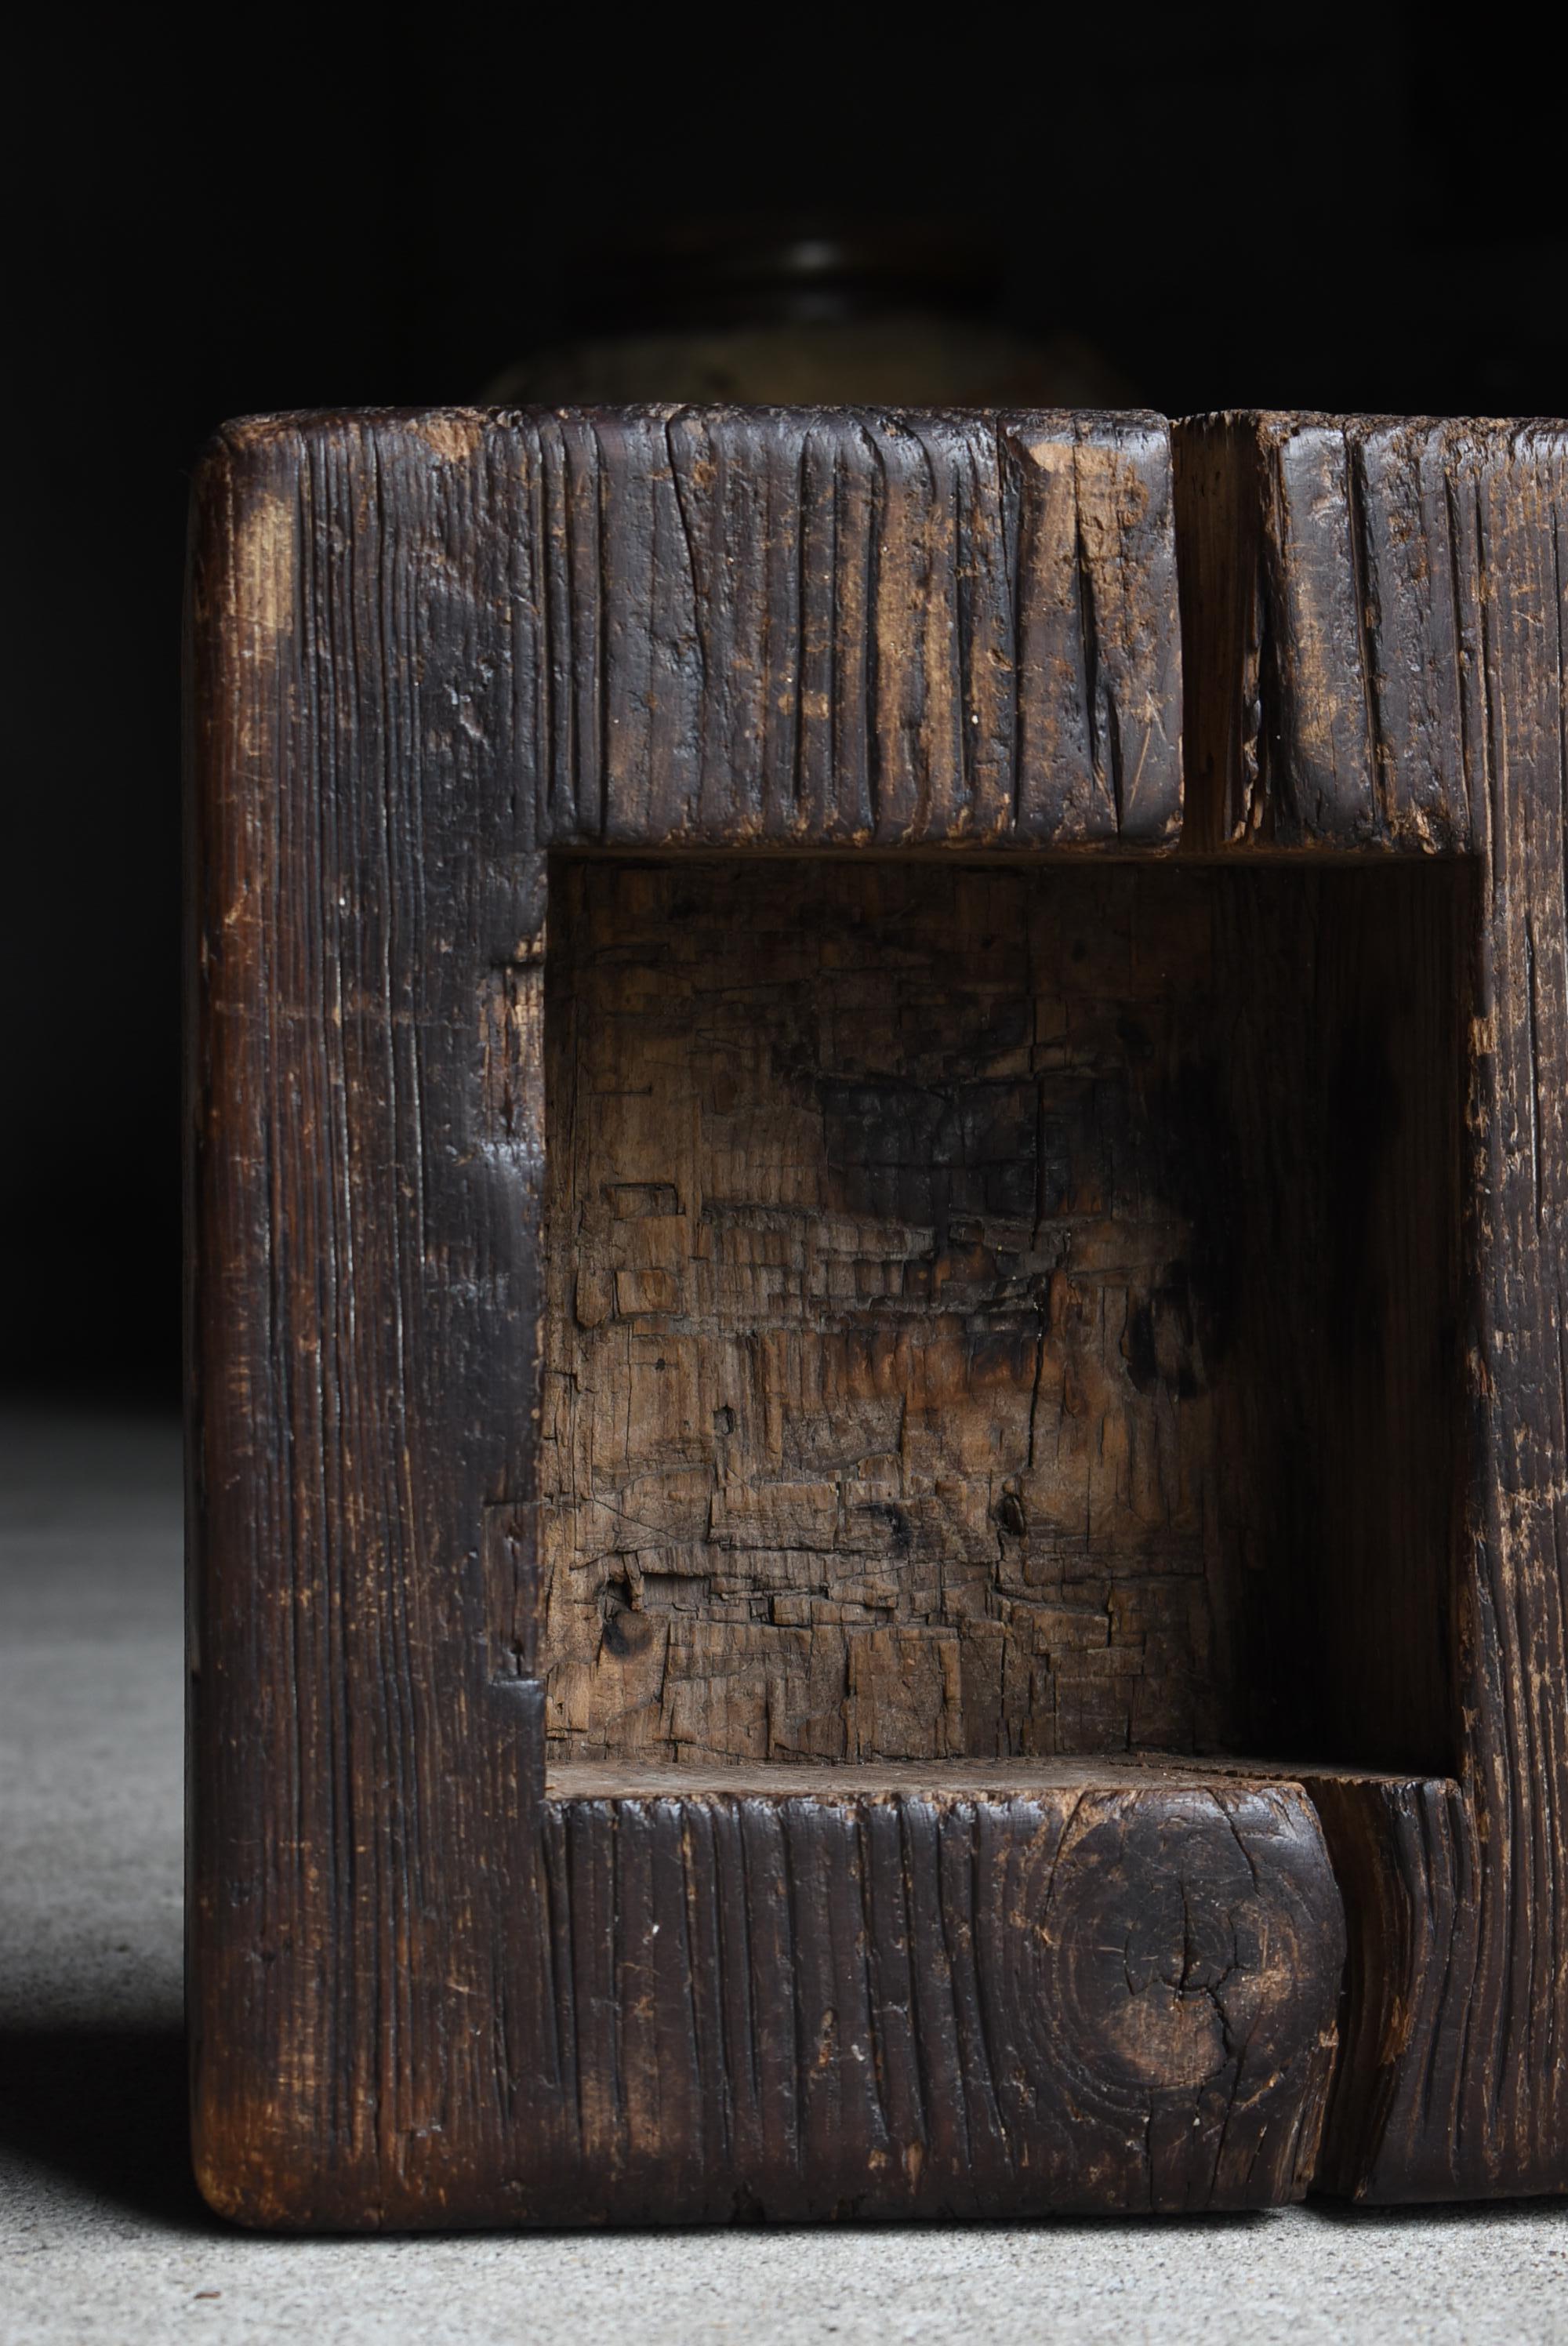 Japanese Antique Primitive Wooden Block Stool 1860s-1900s / Wood Chair Wabisabi 7